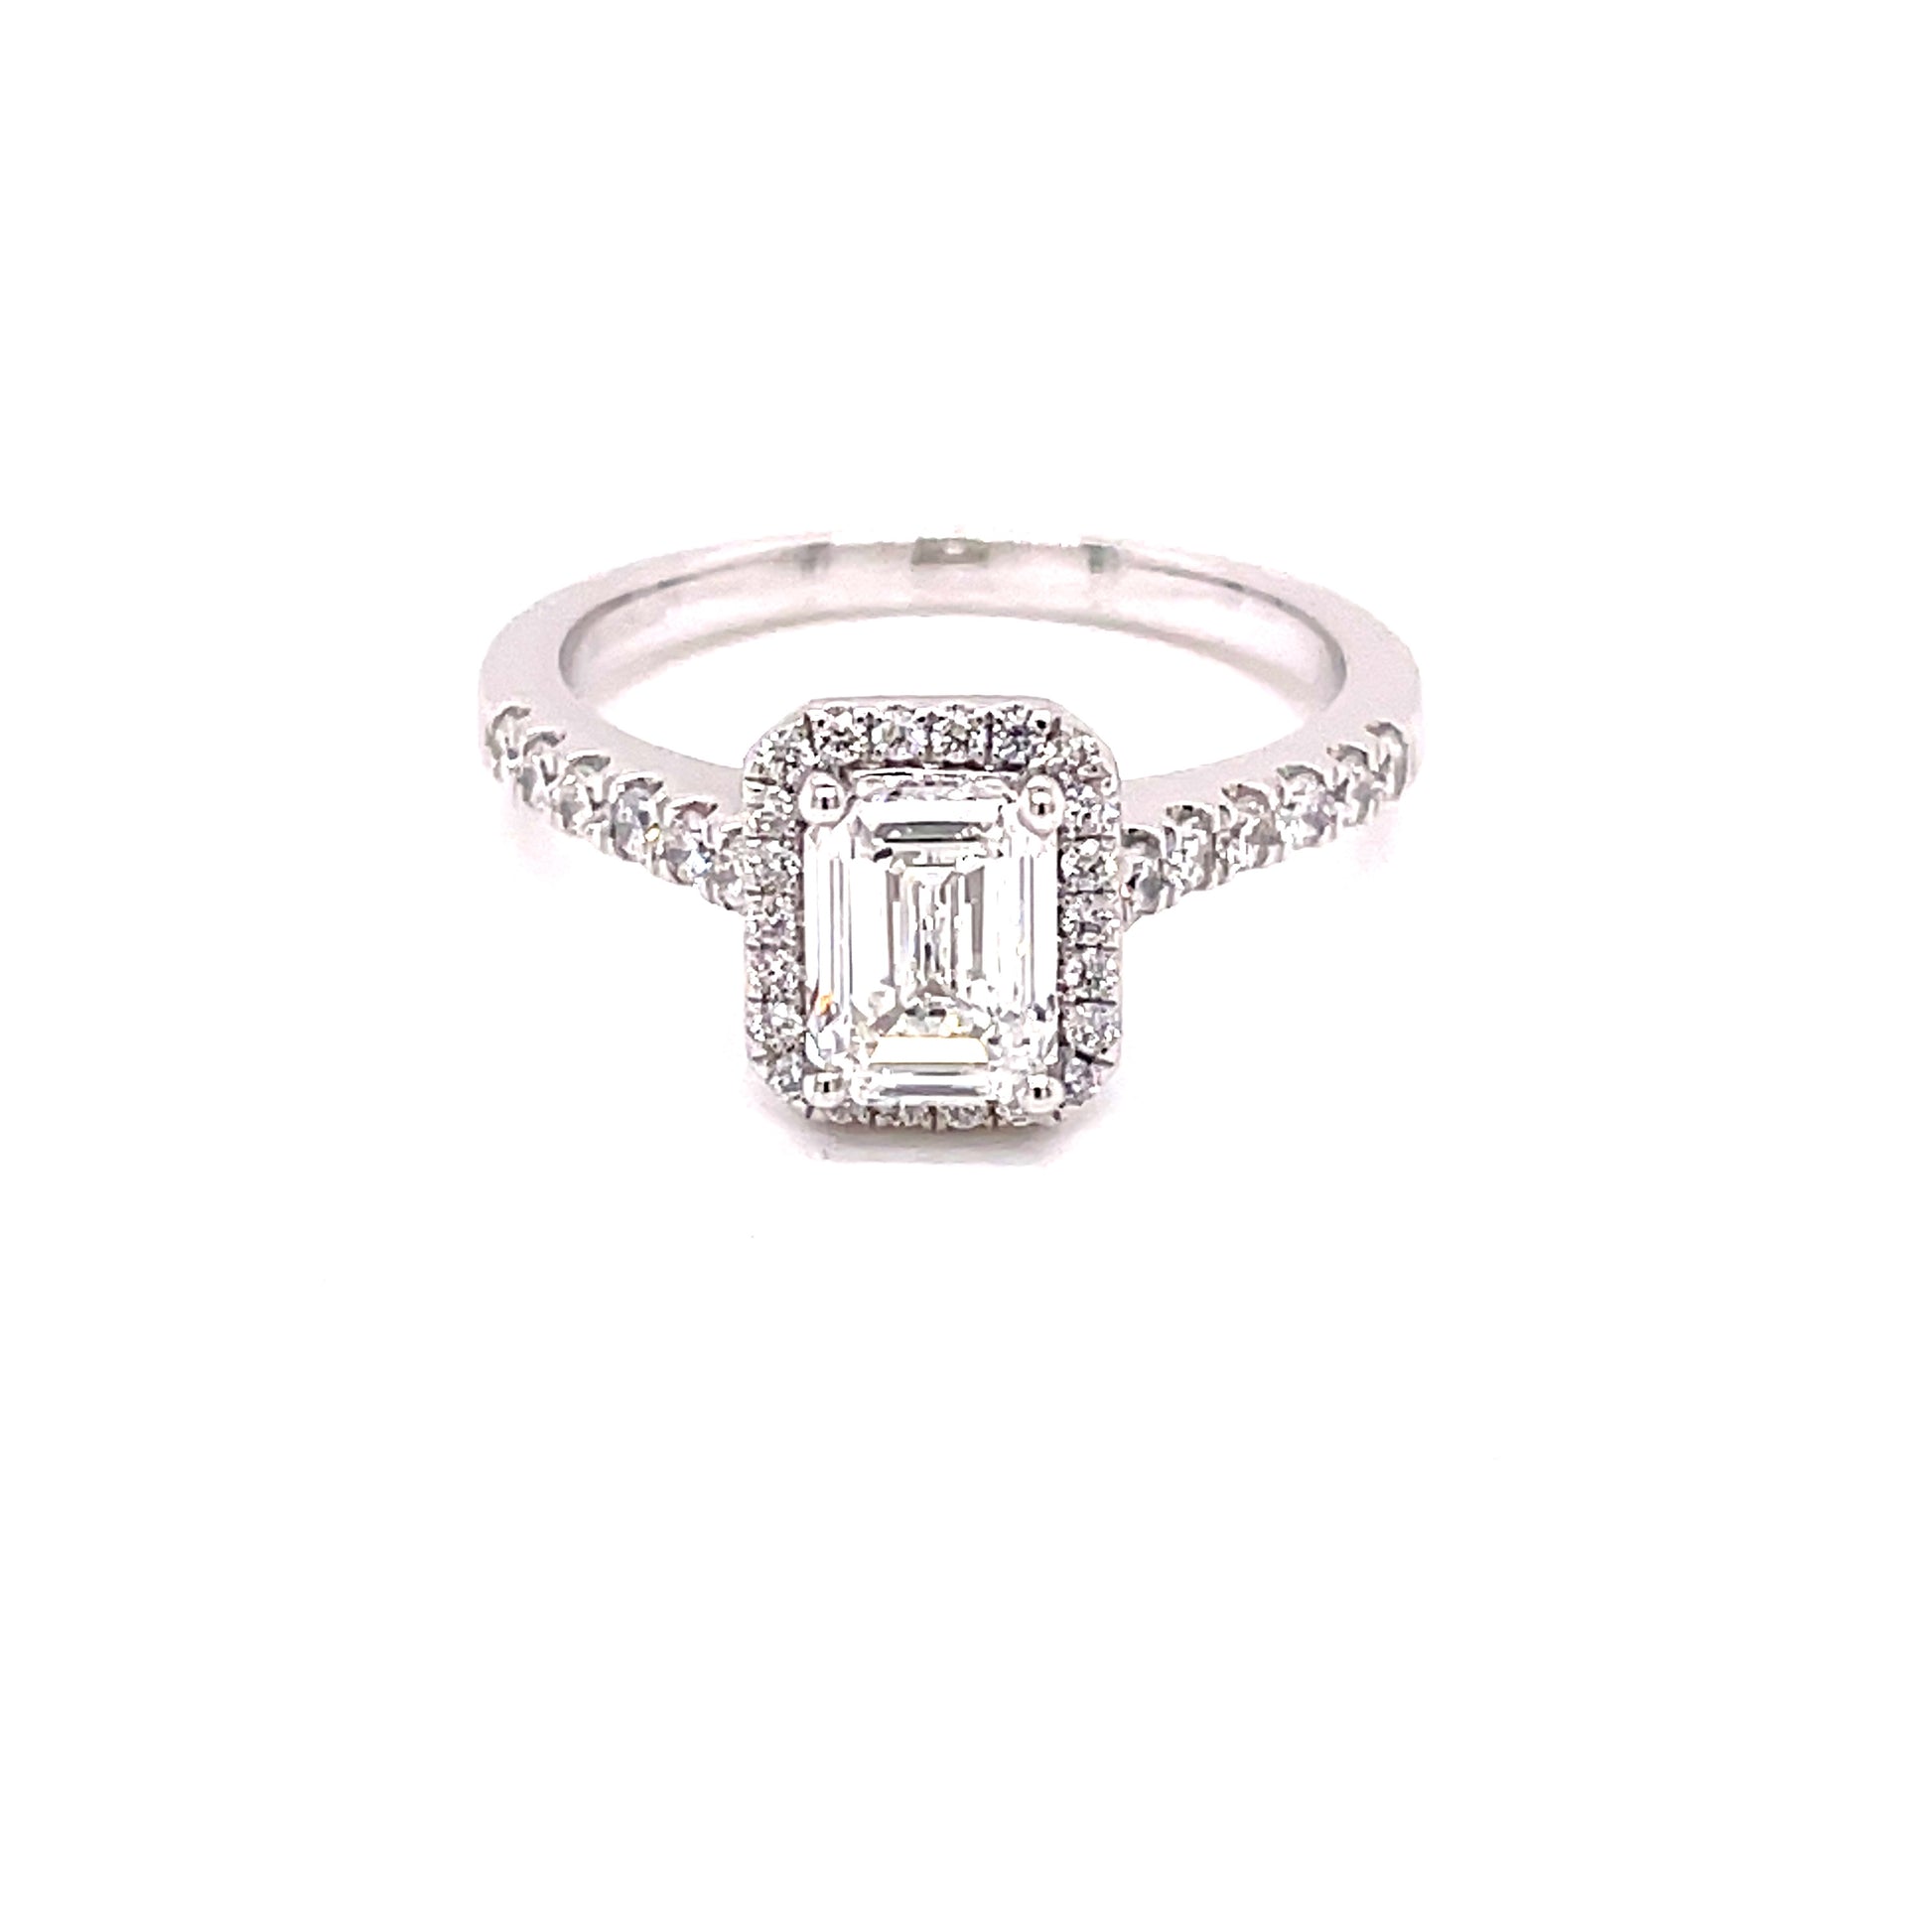 Emerald Cut Diamond Halo Style Ring - 1.35cts  Gardiner Brothers   